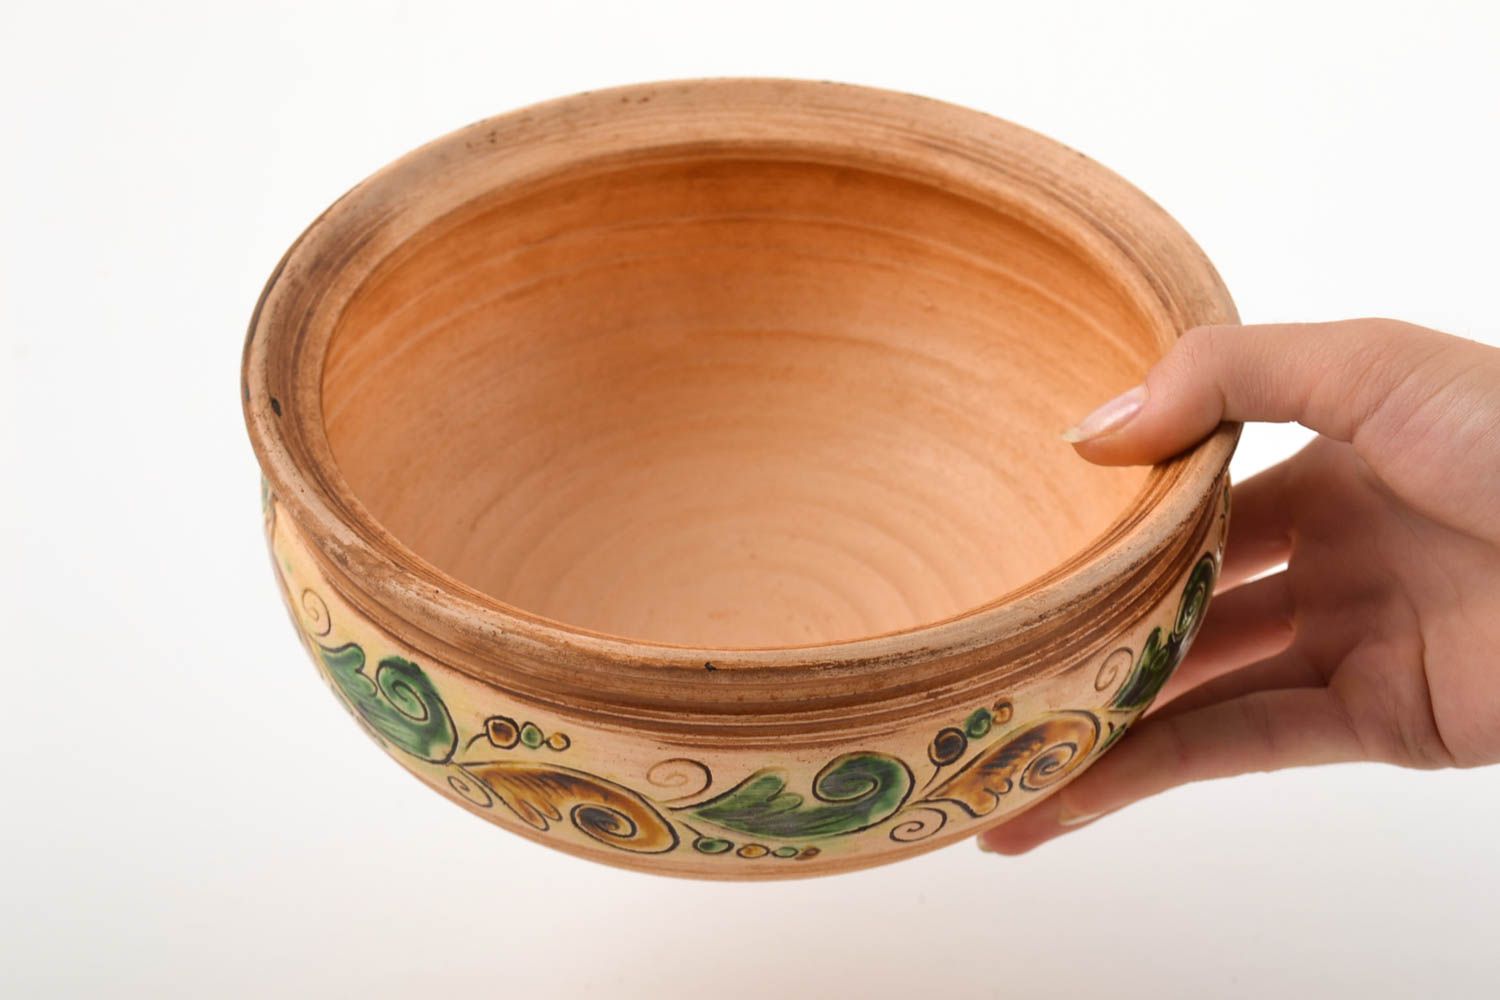 Handmade bowl ceramic dishes unusual bowl for kitchen decor kitchen utensils photo 4